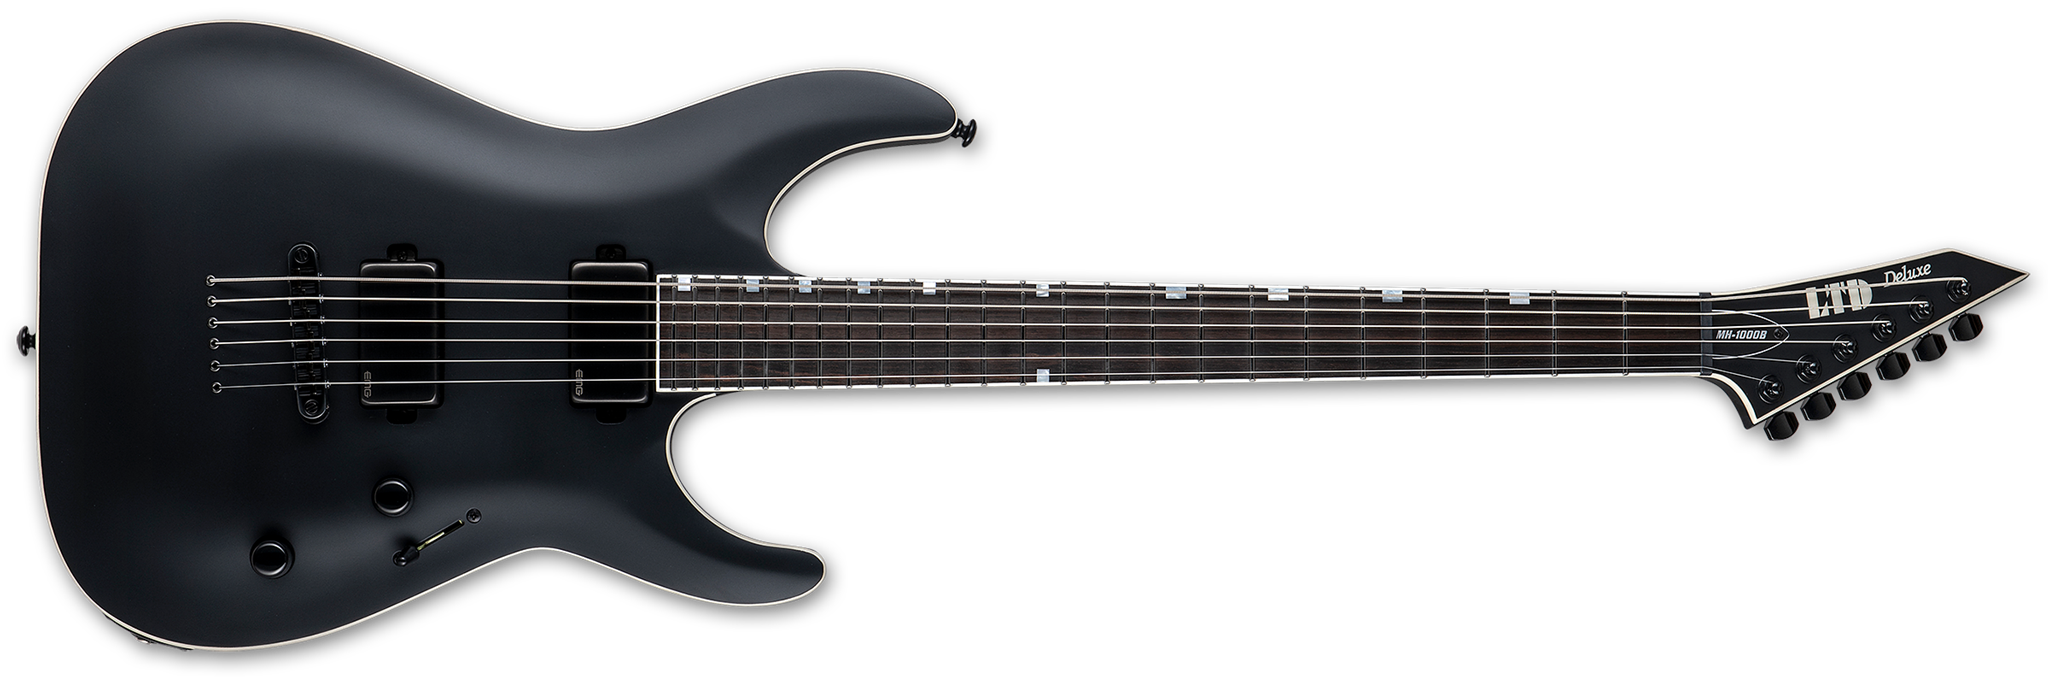 LTD MH-1000 Baritone Black Satin 6-String Electric Guitar  